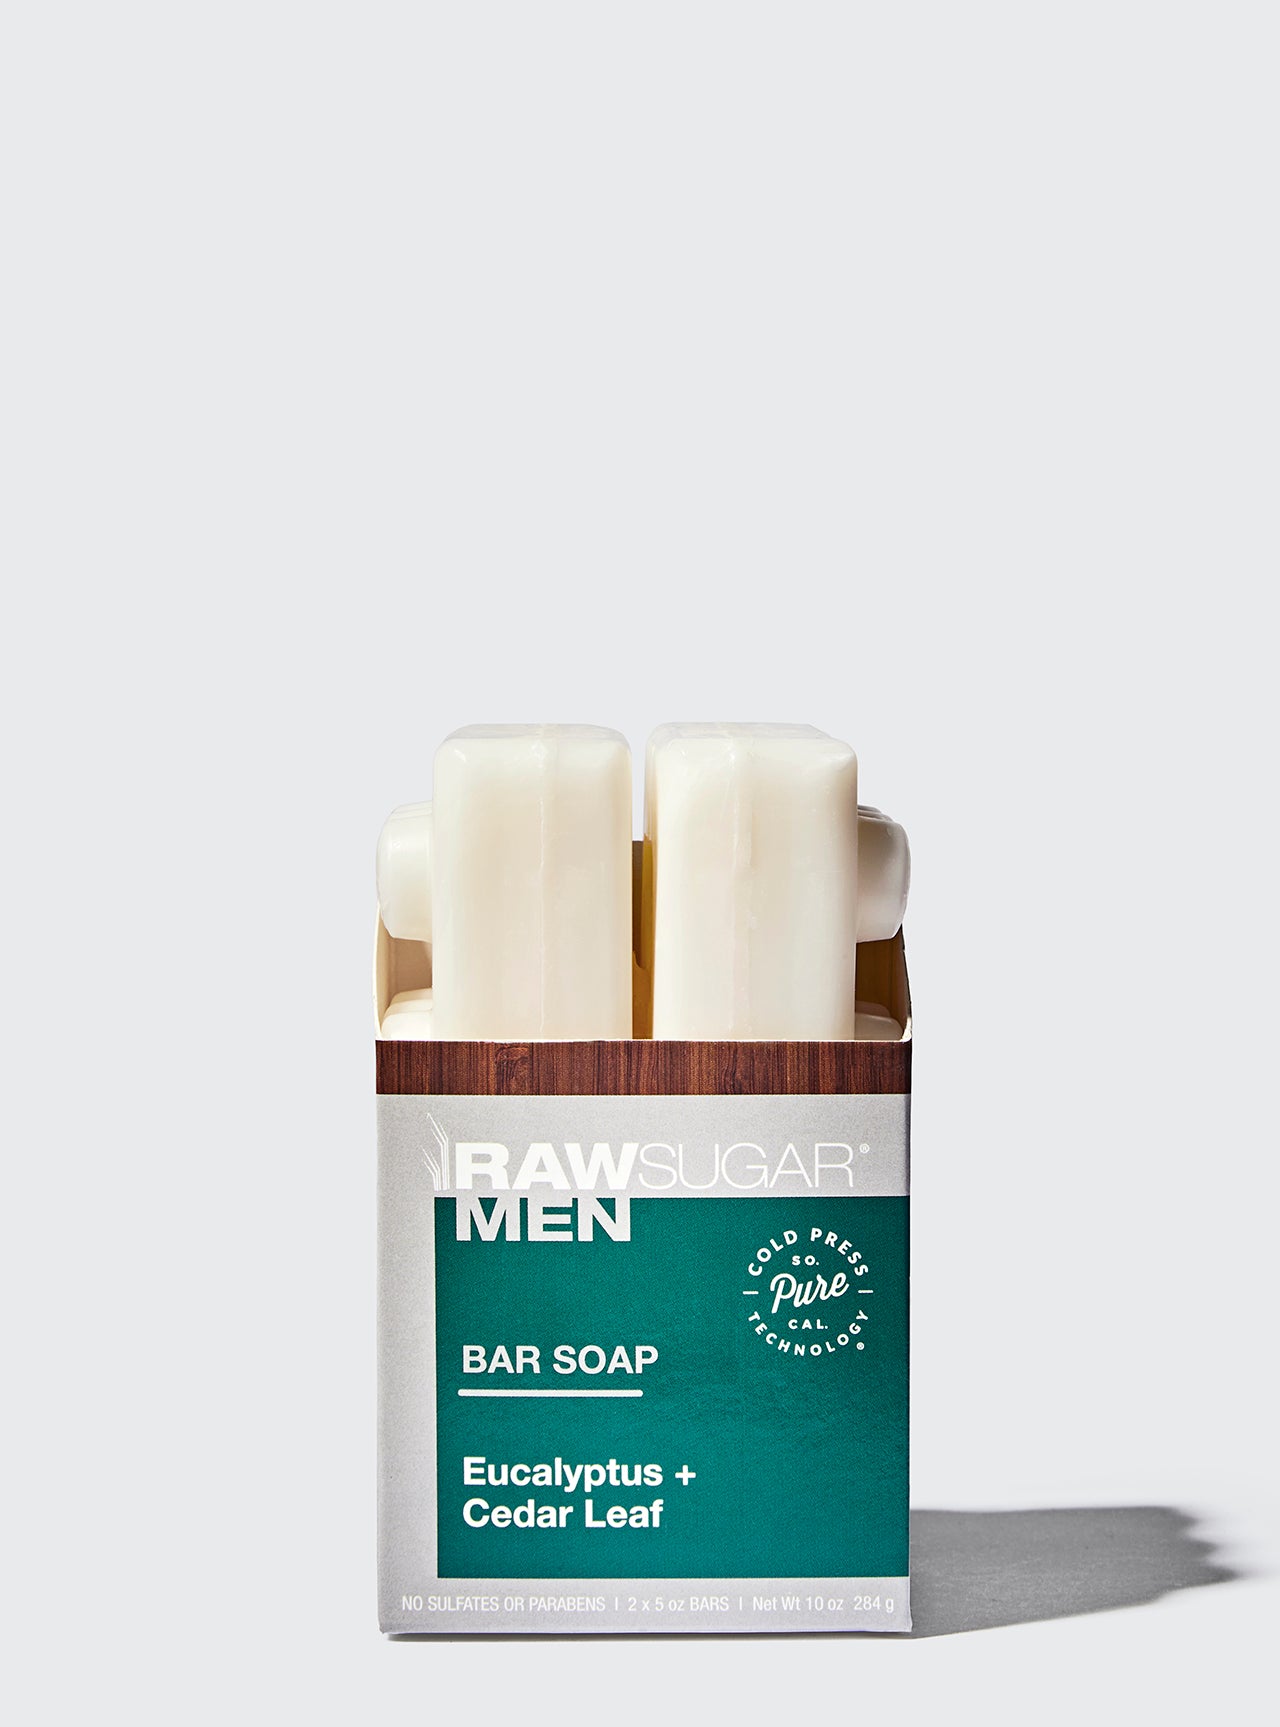 Men's Bar Soap	- Eucalyptus + Cedar Leaf